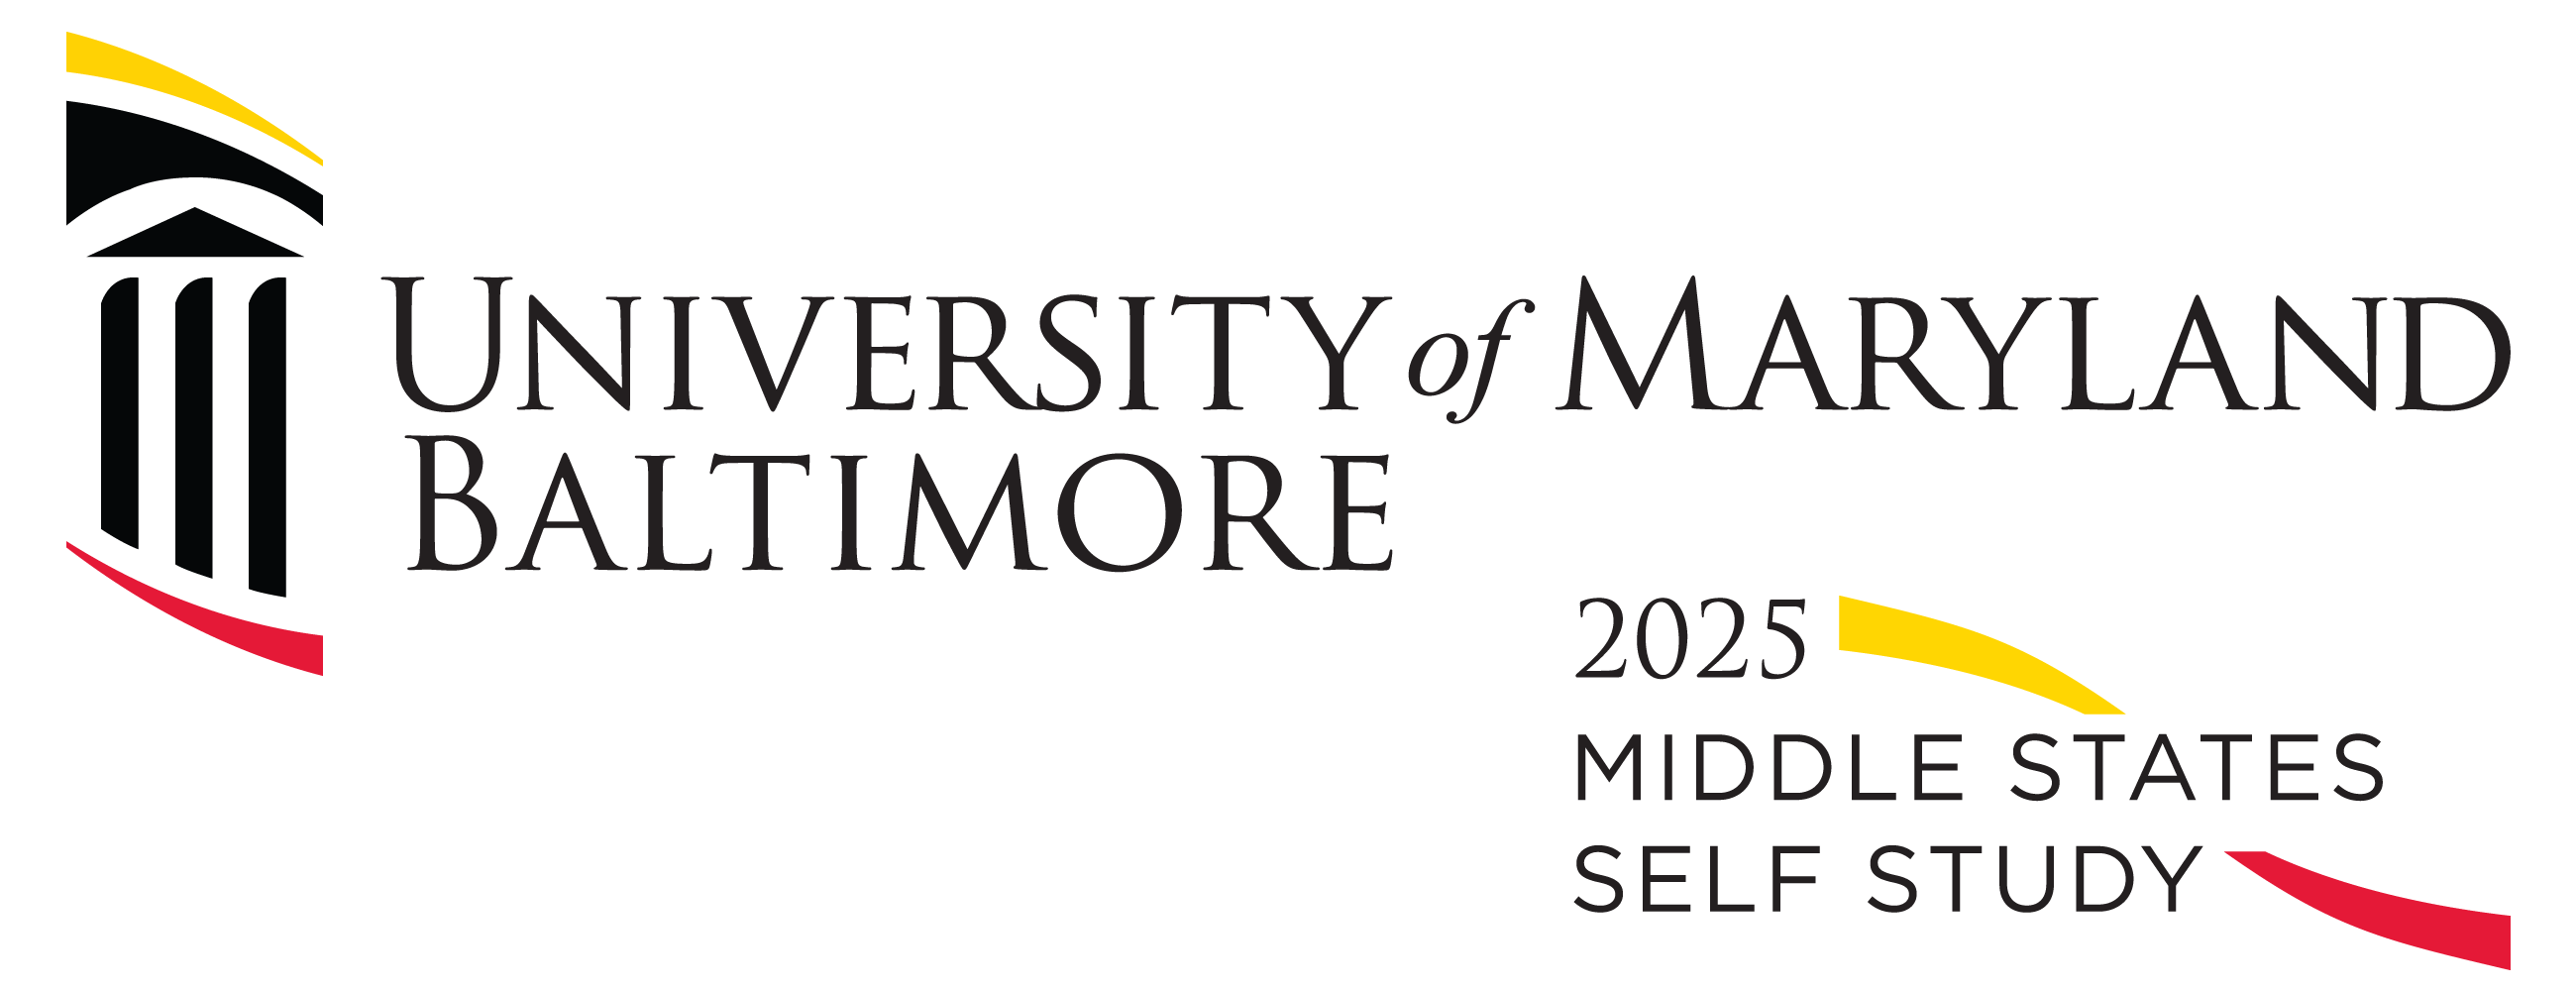 UMB Middle States logo banner